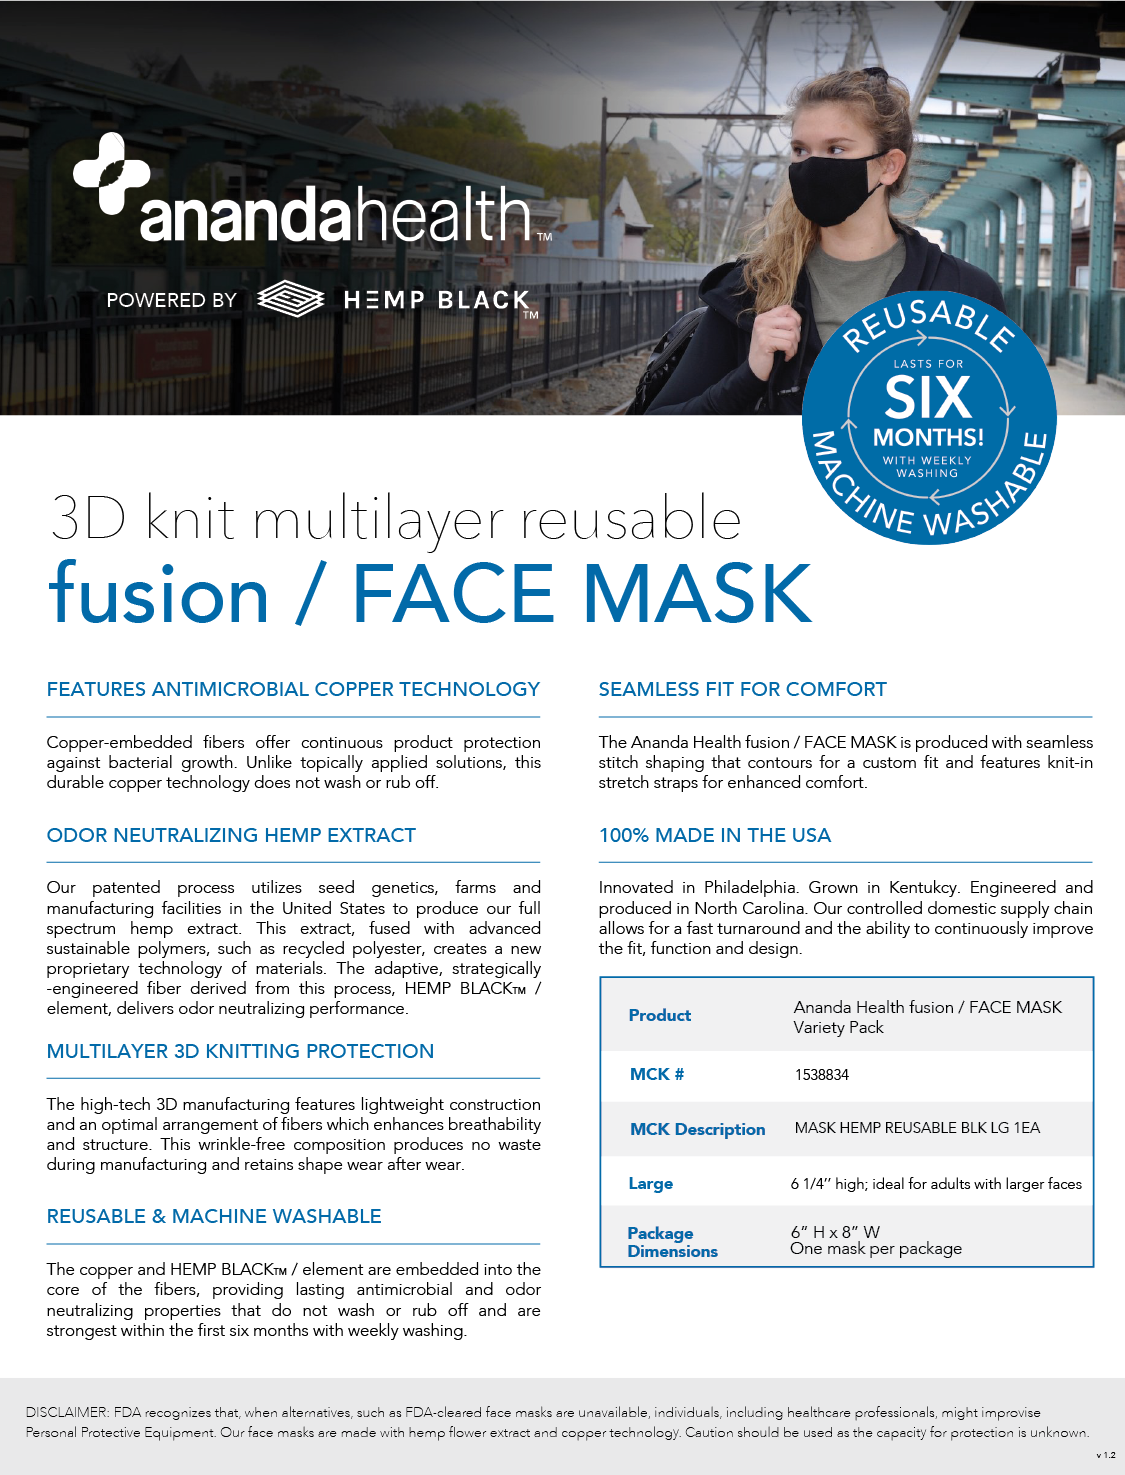 Ananda Health face mask